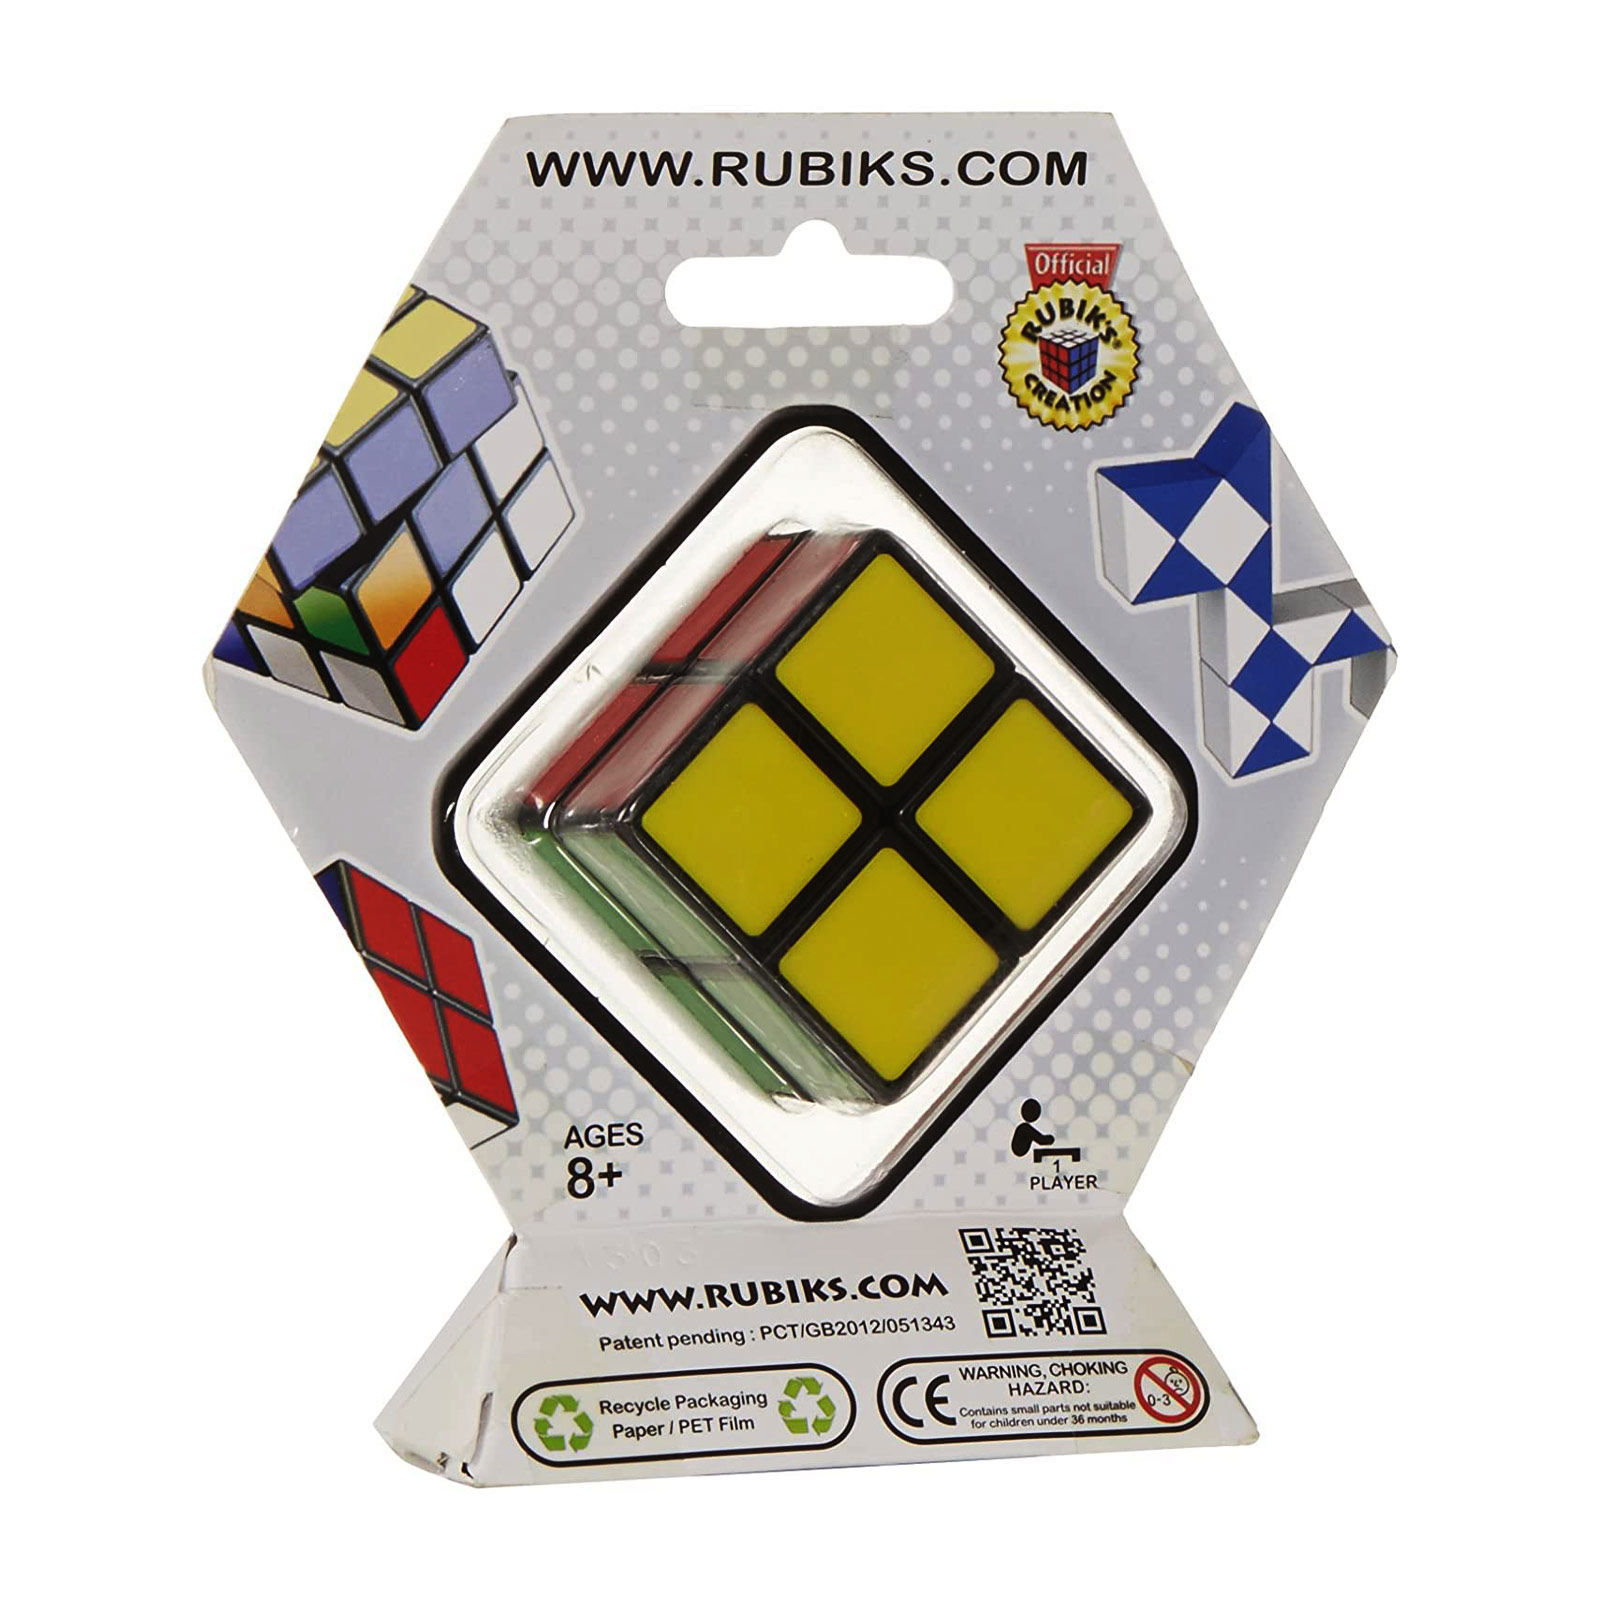 Rubiks 2 X 2